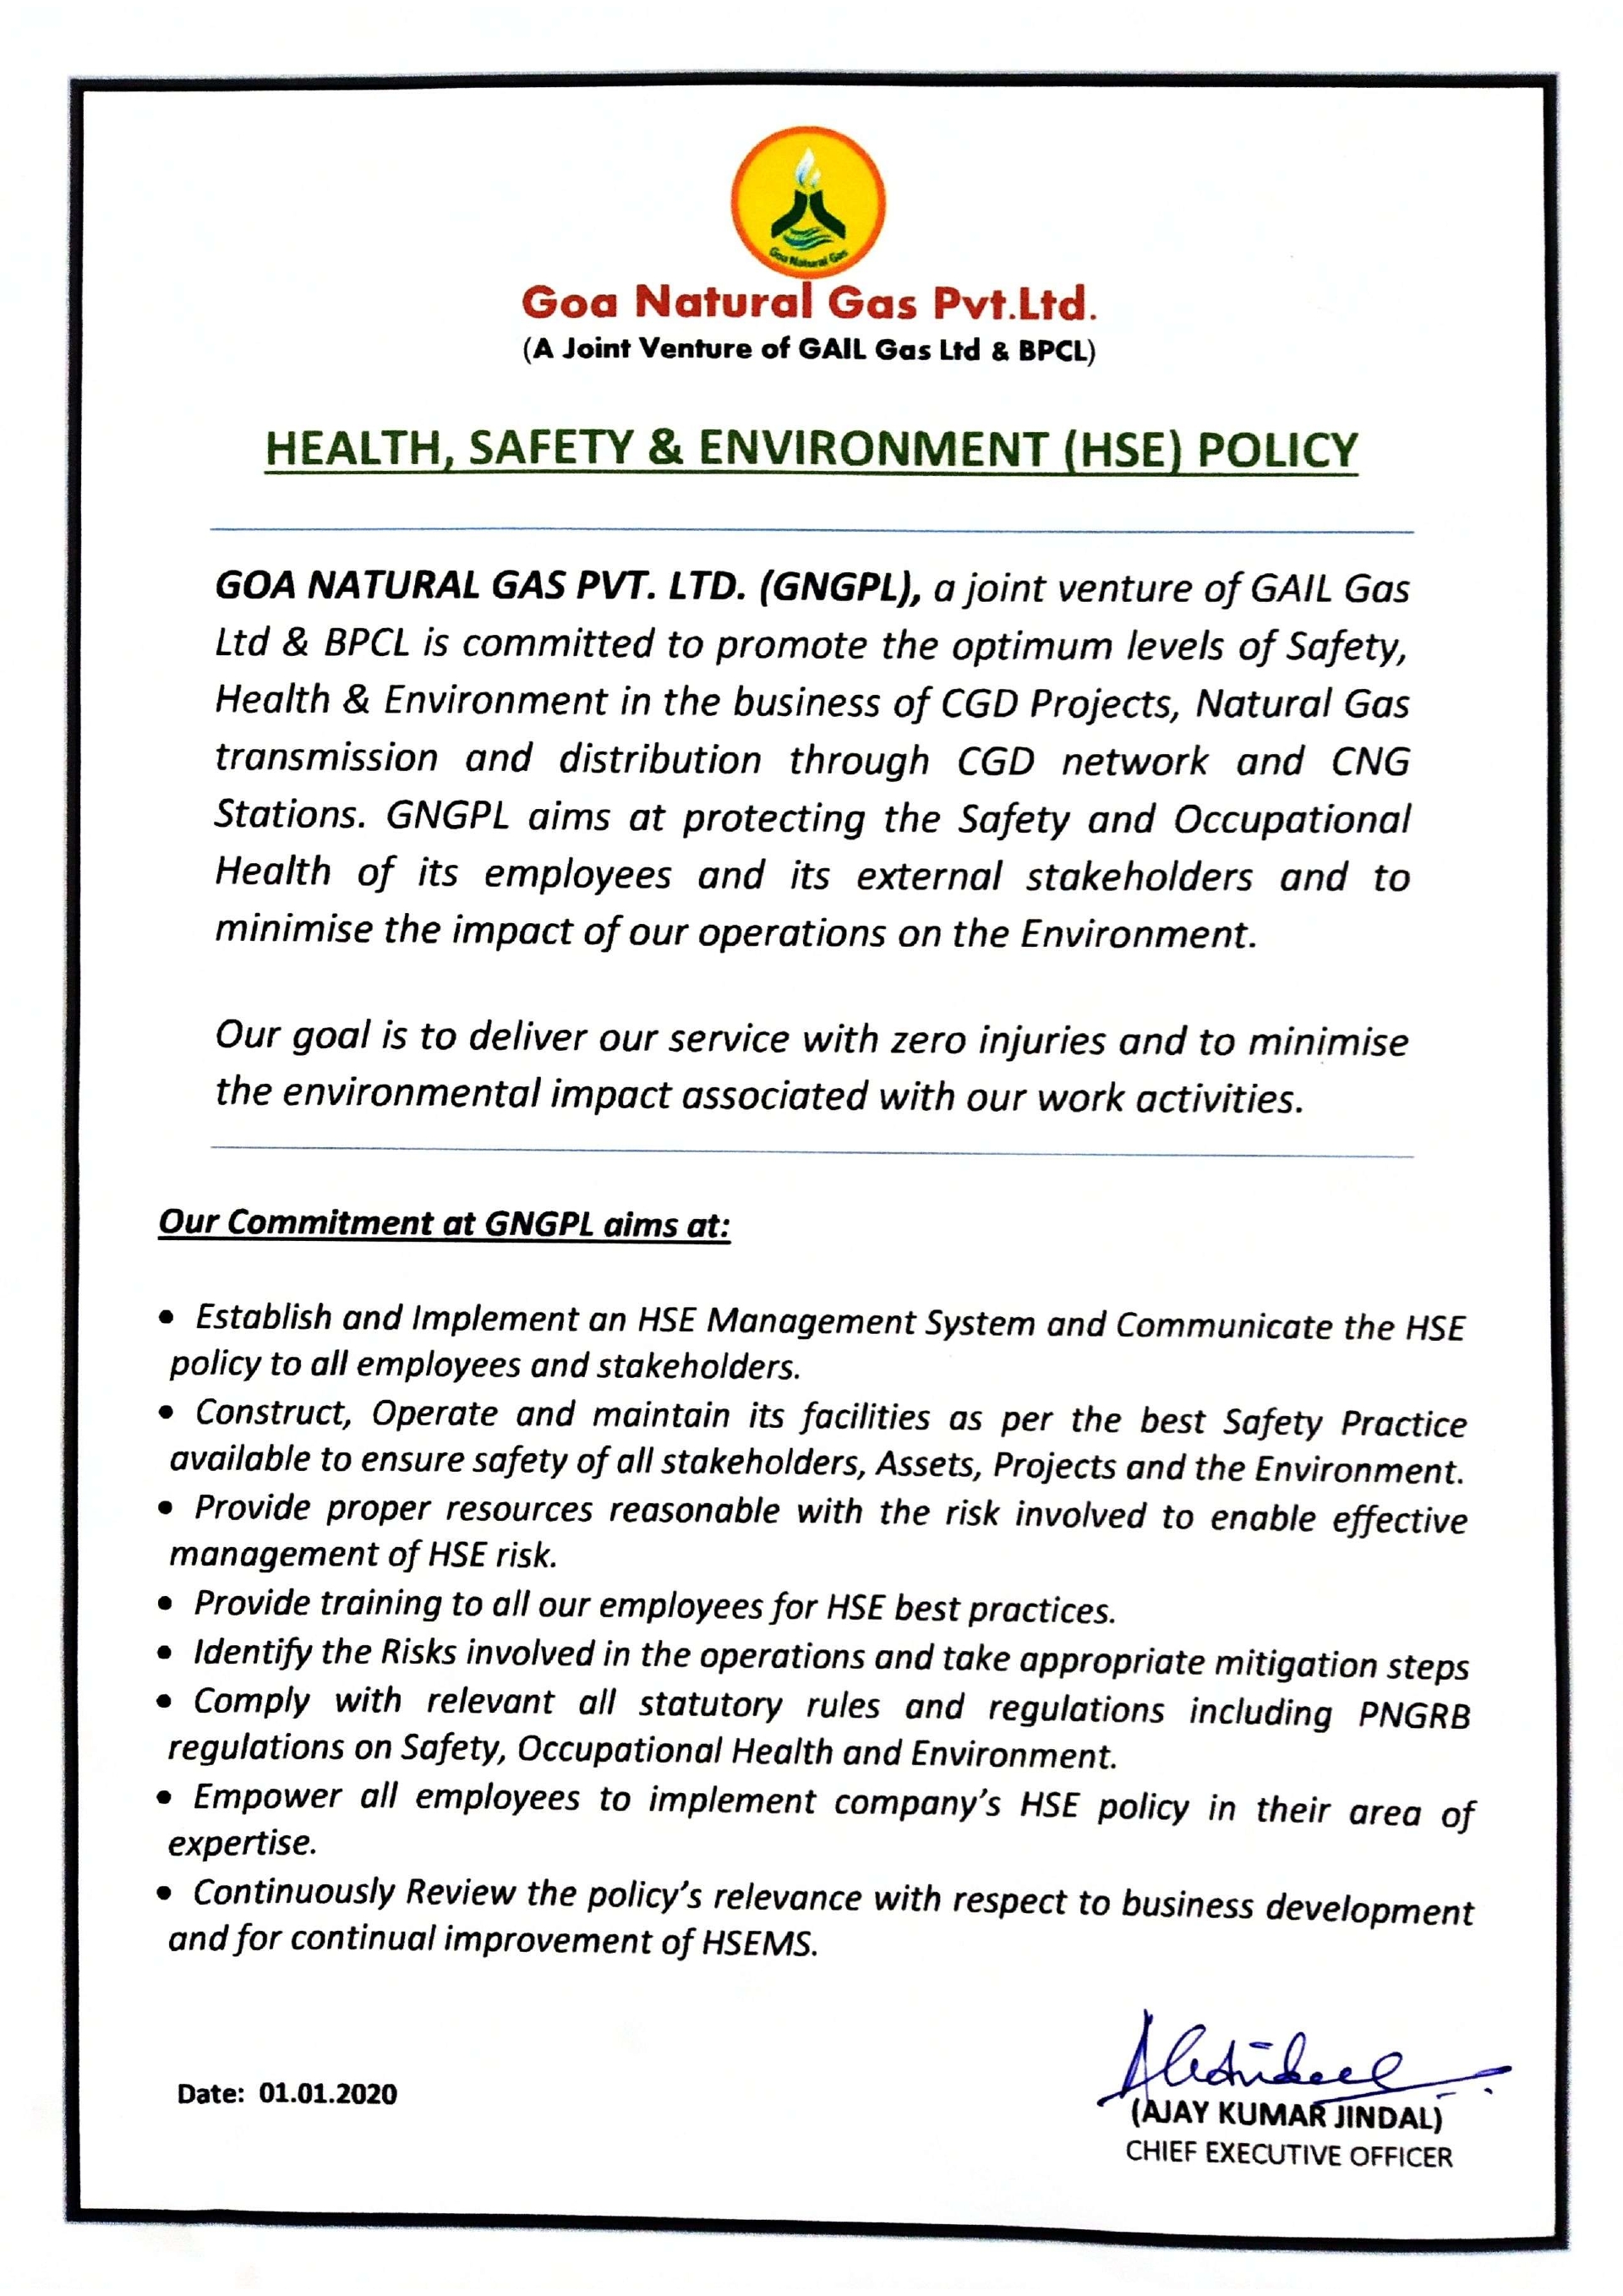 Goa Natural Gas Pvt. Ltd. | HSE Policy